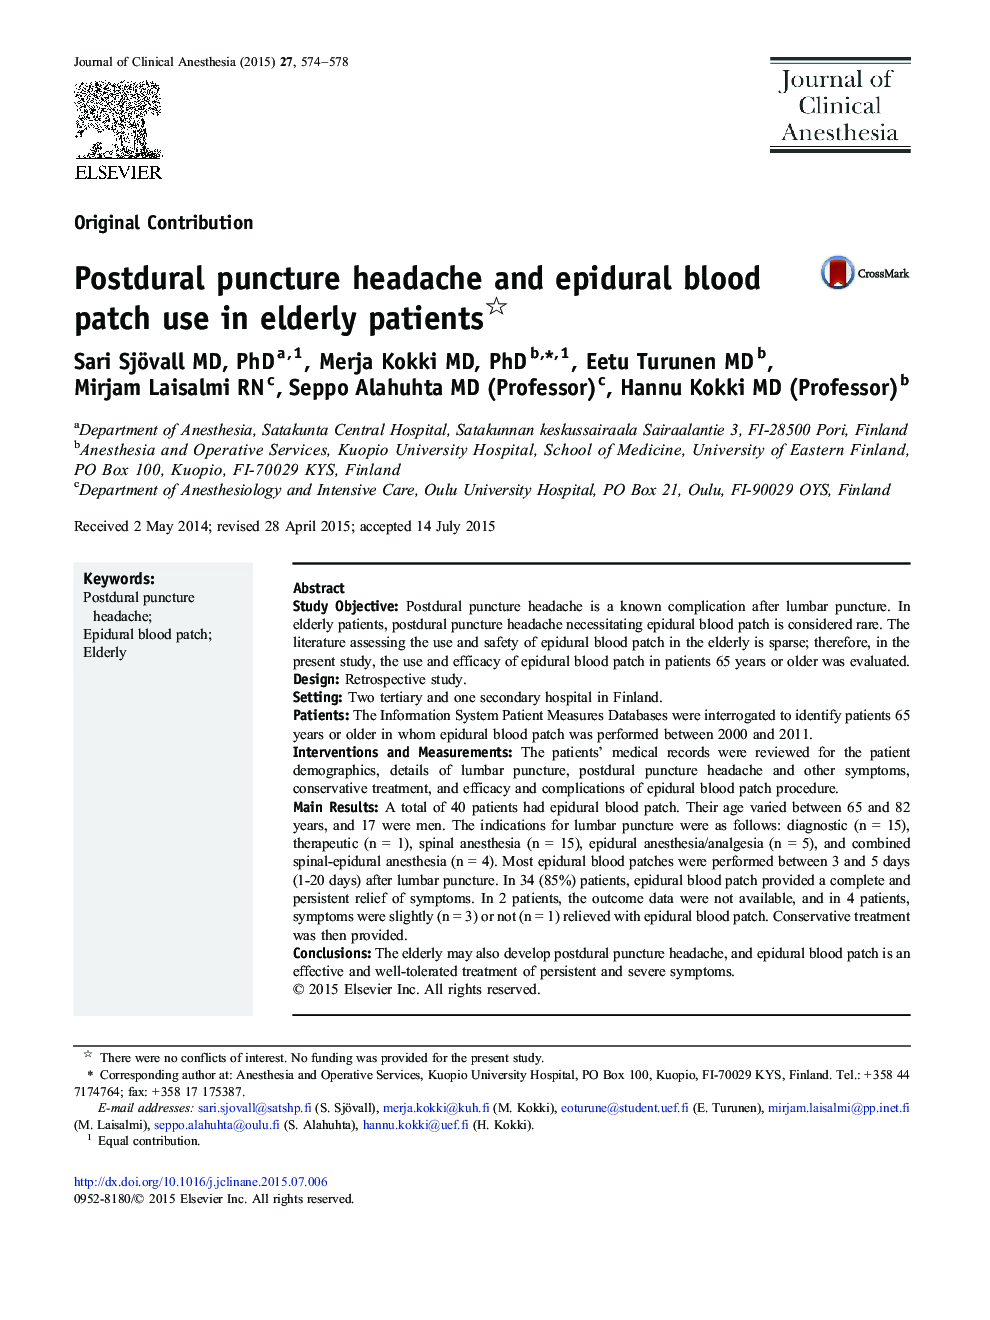 Postdural puncture headache and epidural blood patch use in elderly patients 